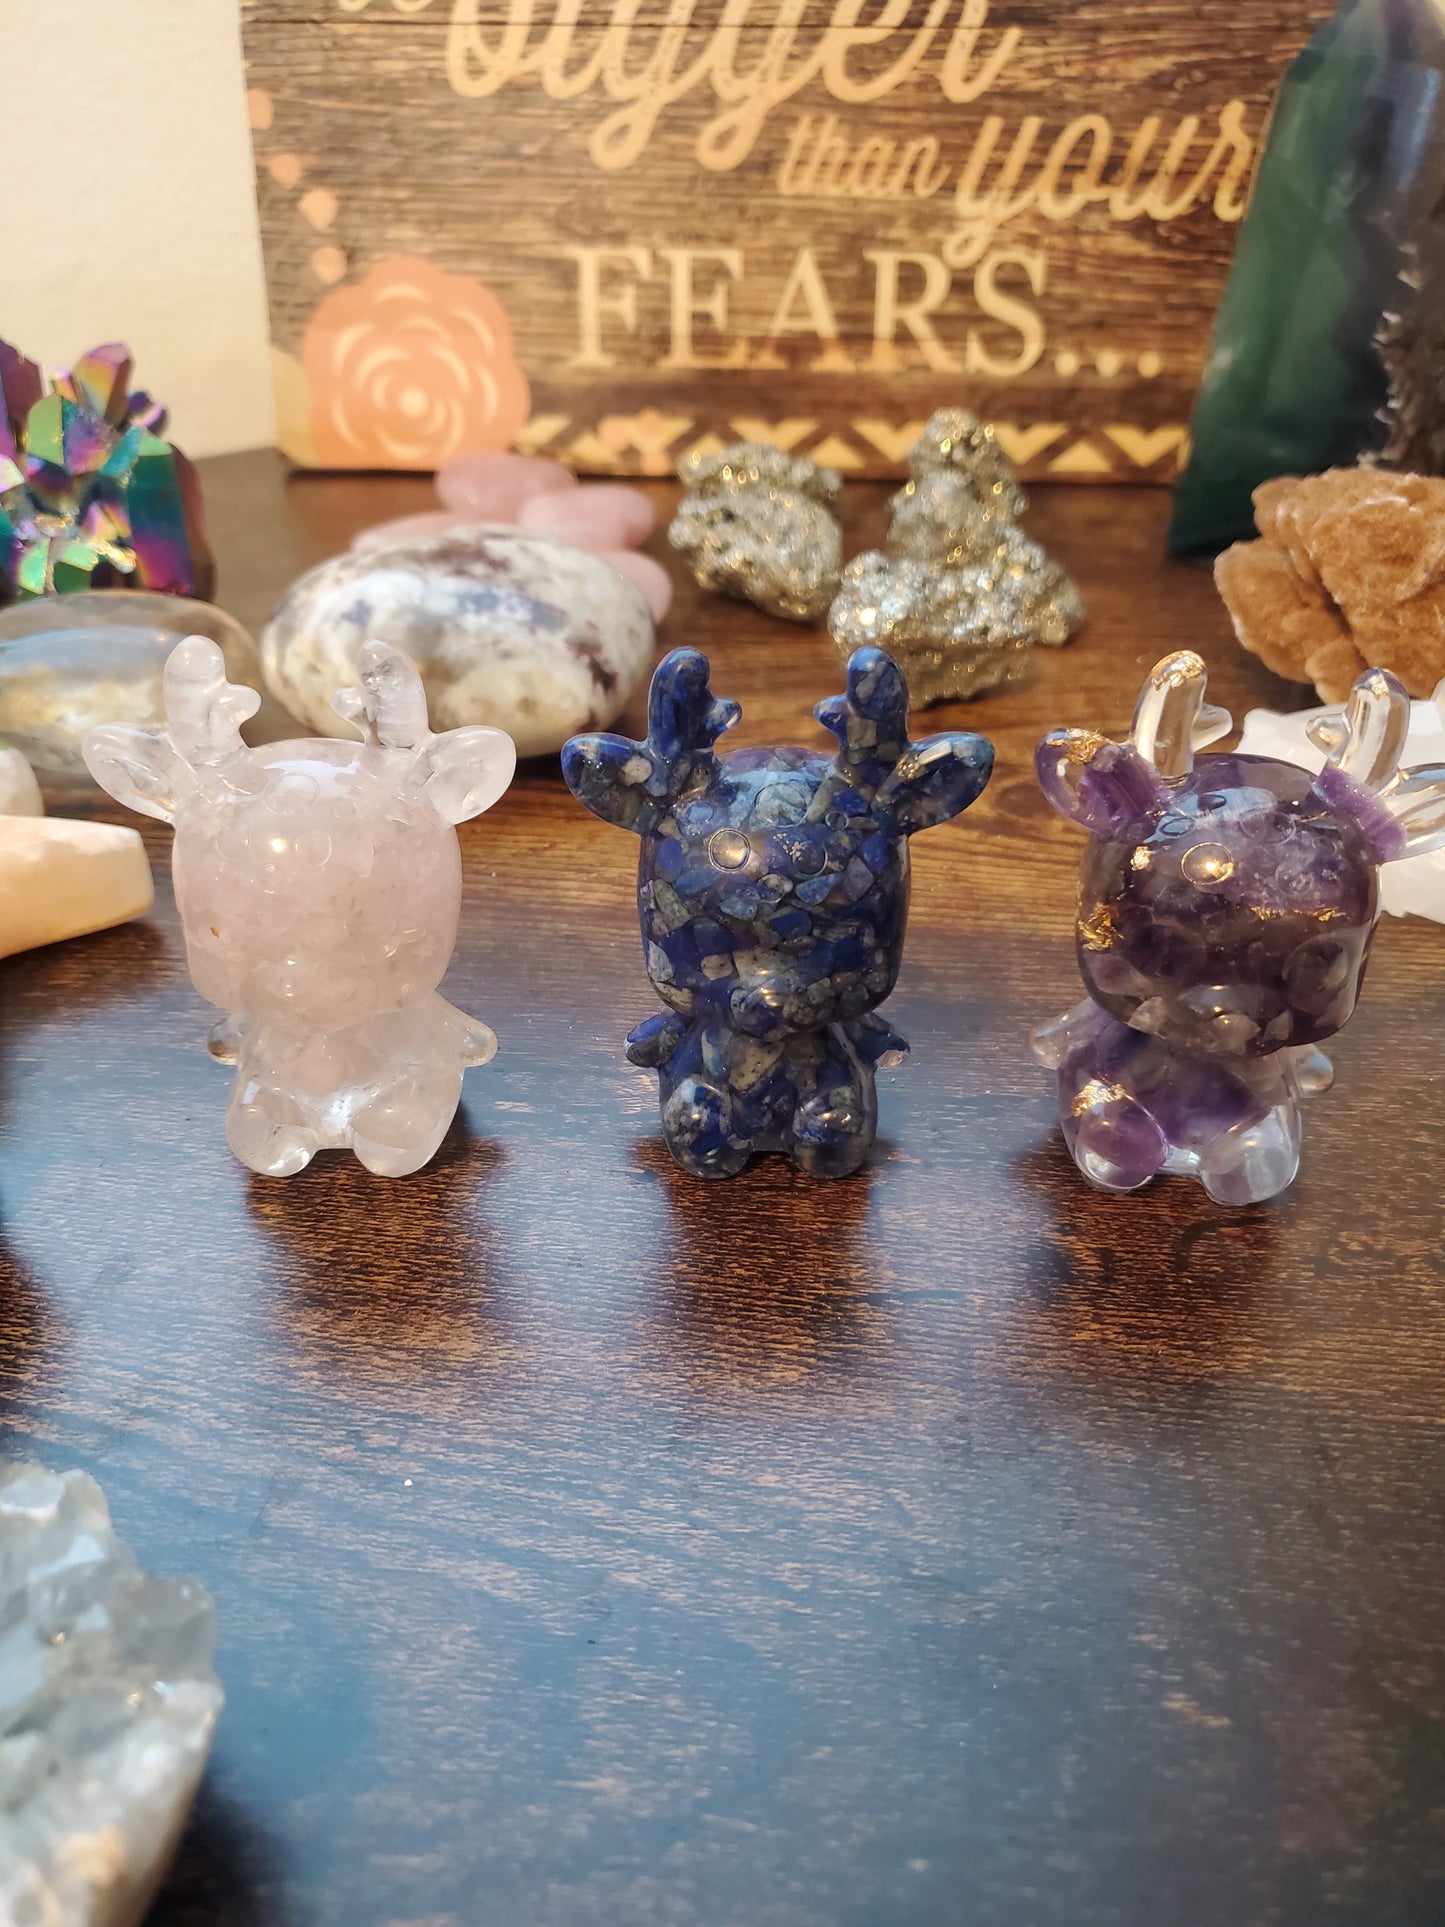 Resin Reindeer Amethyst/ Lapis Lazuli /Rose Quartz Crystal Chips enclosed in Resin Figurines - Healing Plants Miami